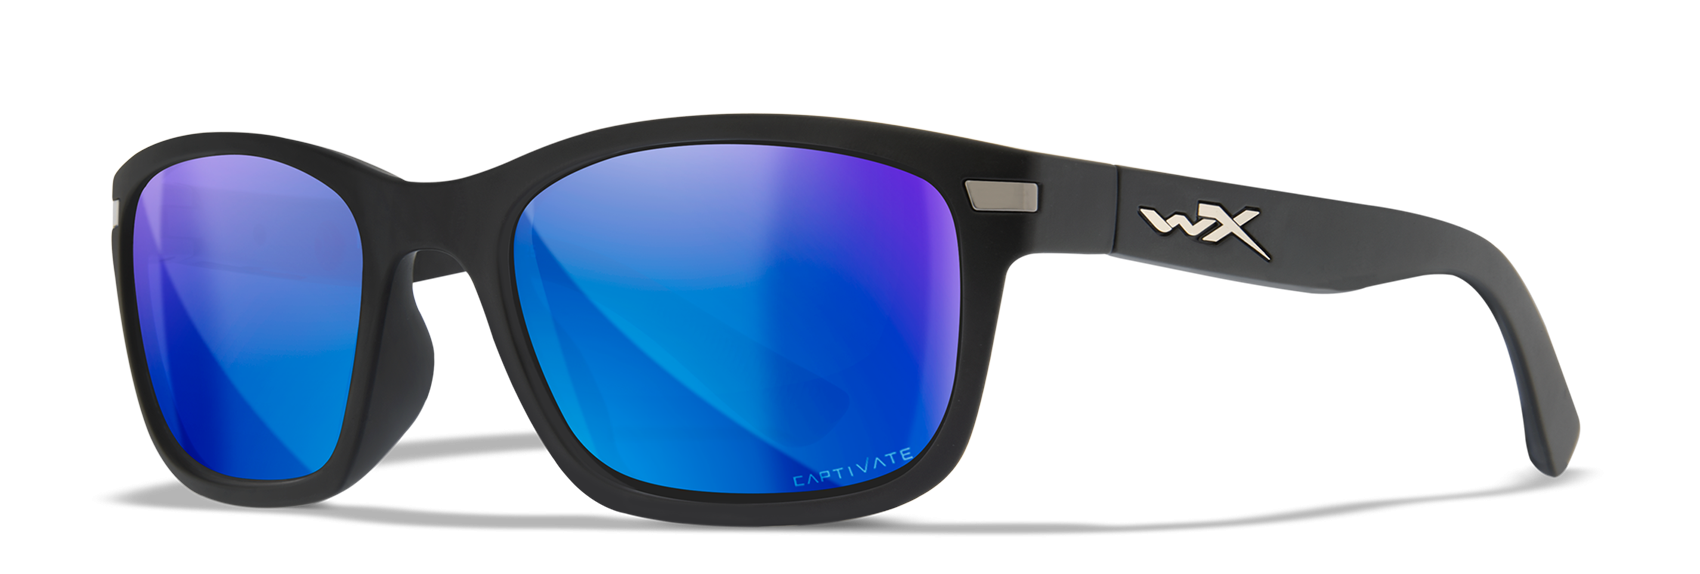 Wiley X WX Helix Blue Mirror Lens Polycarbonate Sunglasses